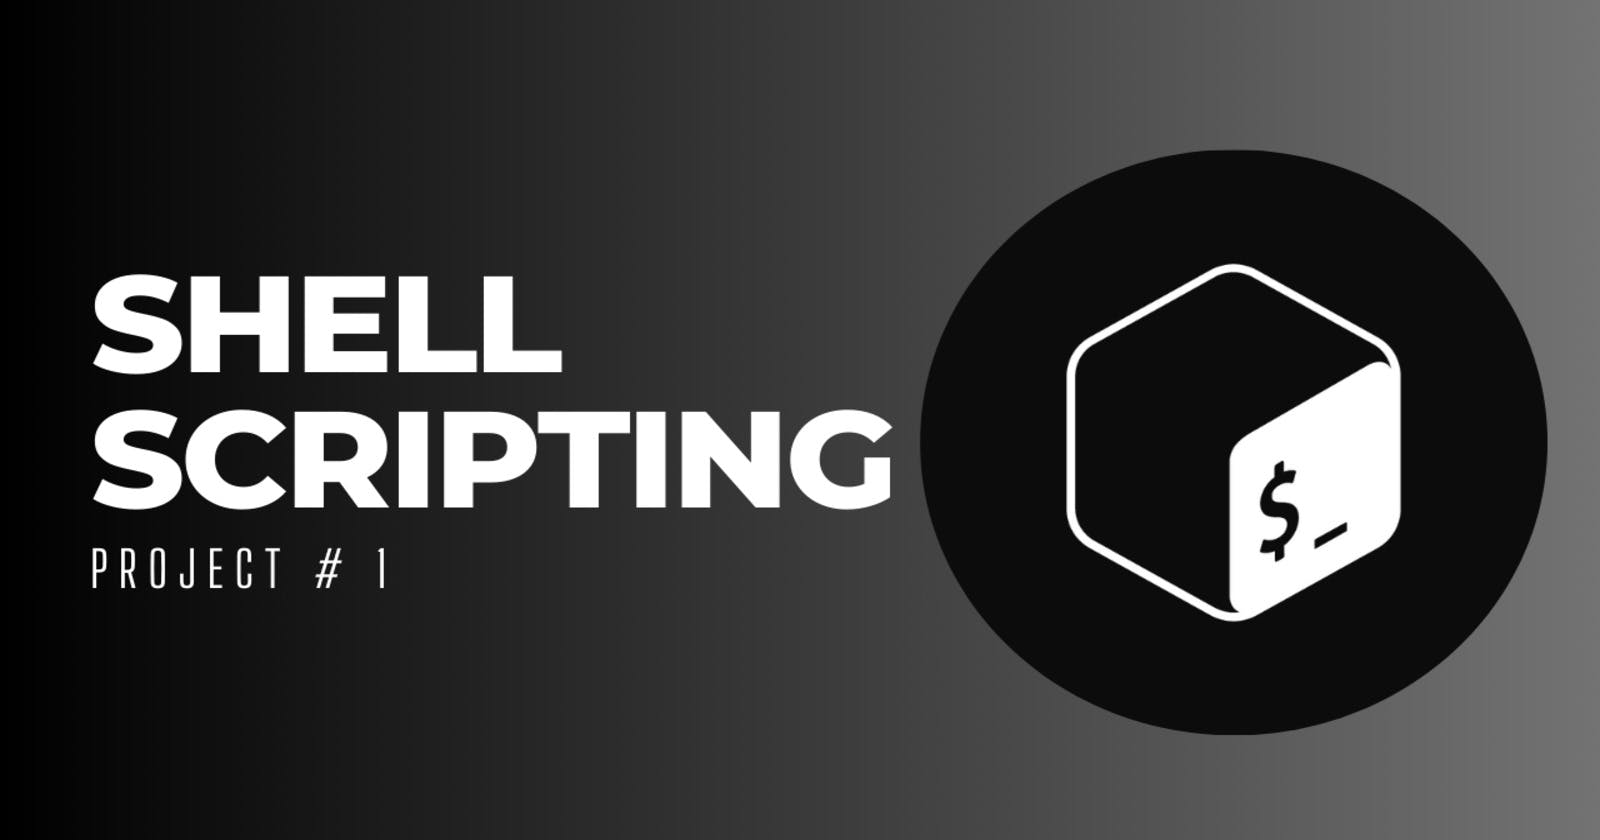 Project # 1 - Basic Backup Shell Script